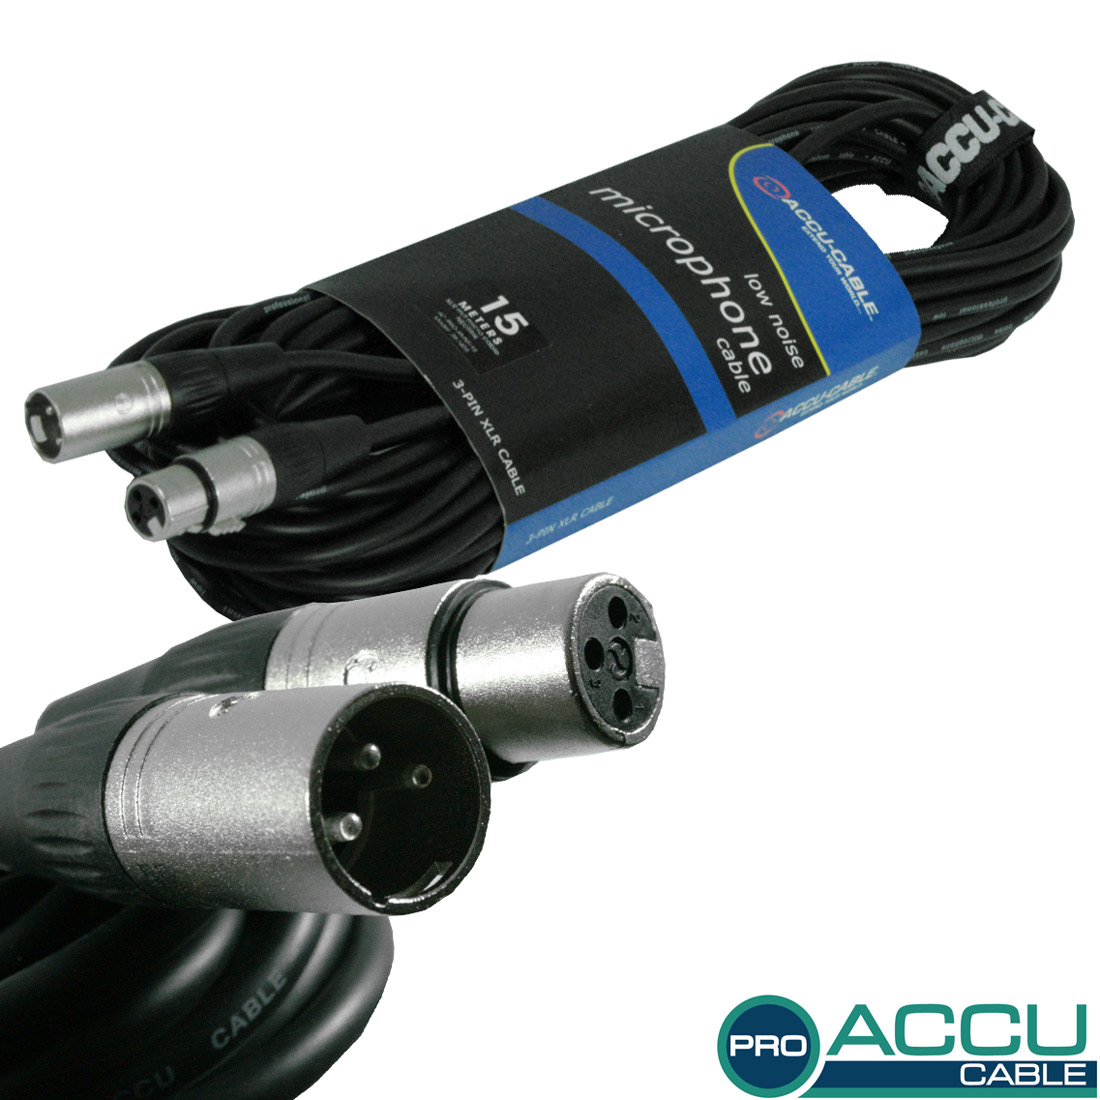 Accu Cable AC-PRO XLR audio cable 15,0m